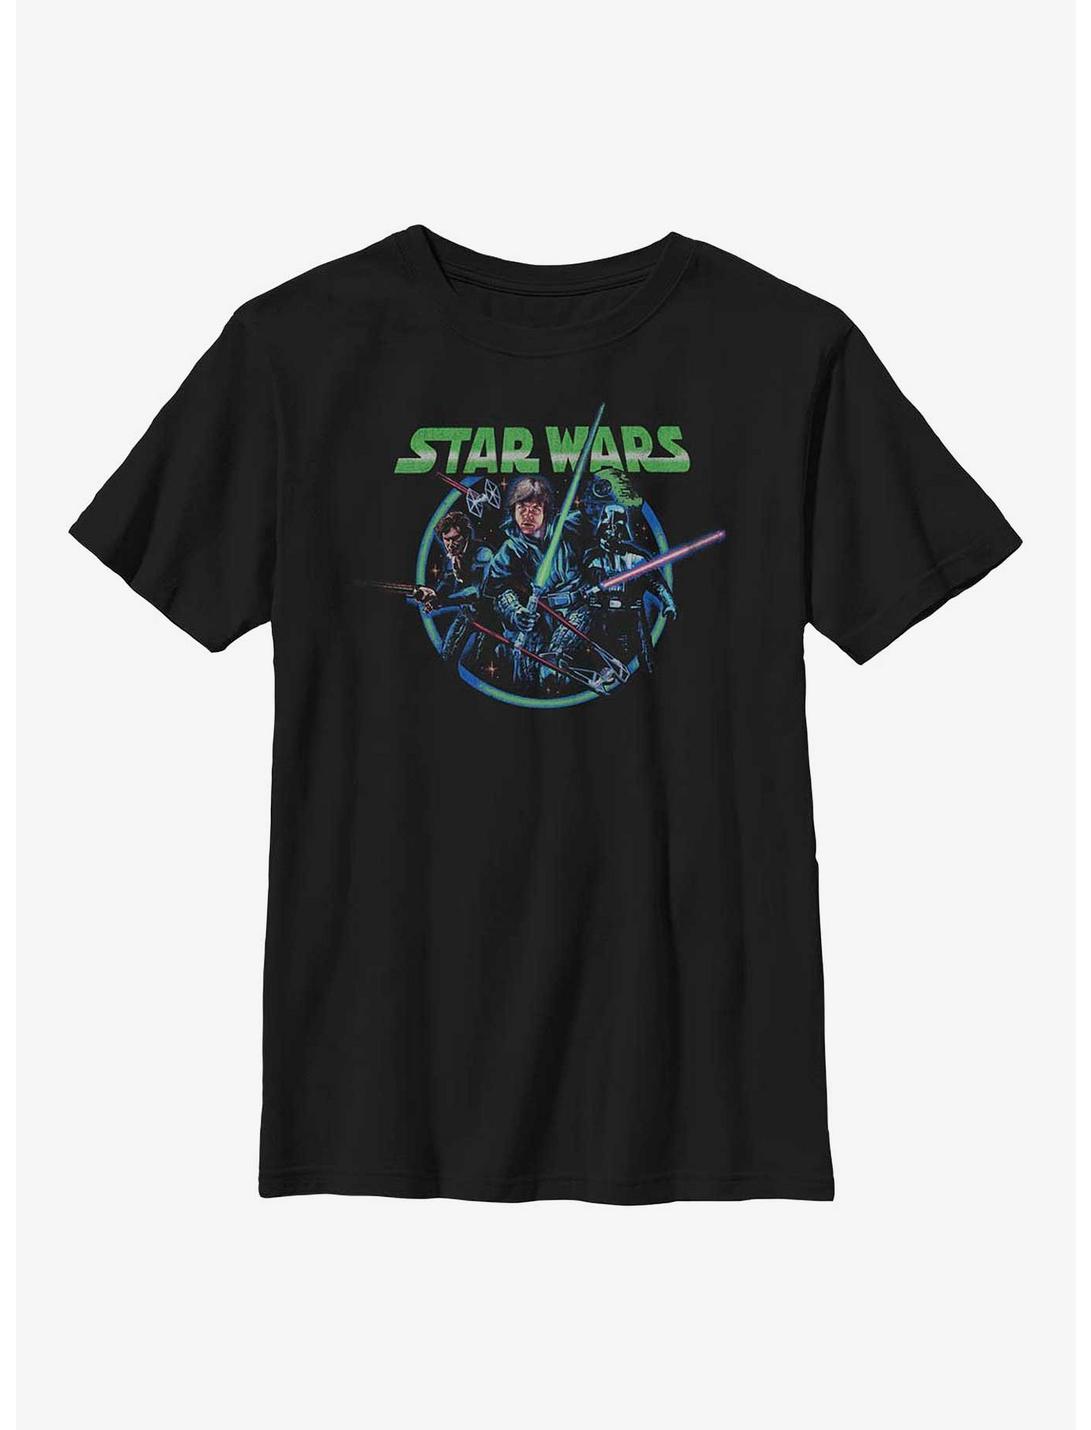 Star Wars Retro Group Luke, Han, & Vader Youth T-Shirt, BLACK, hi-res